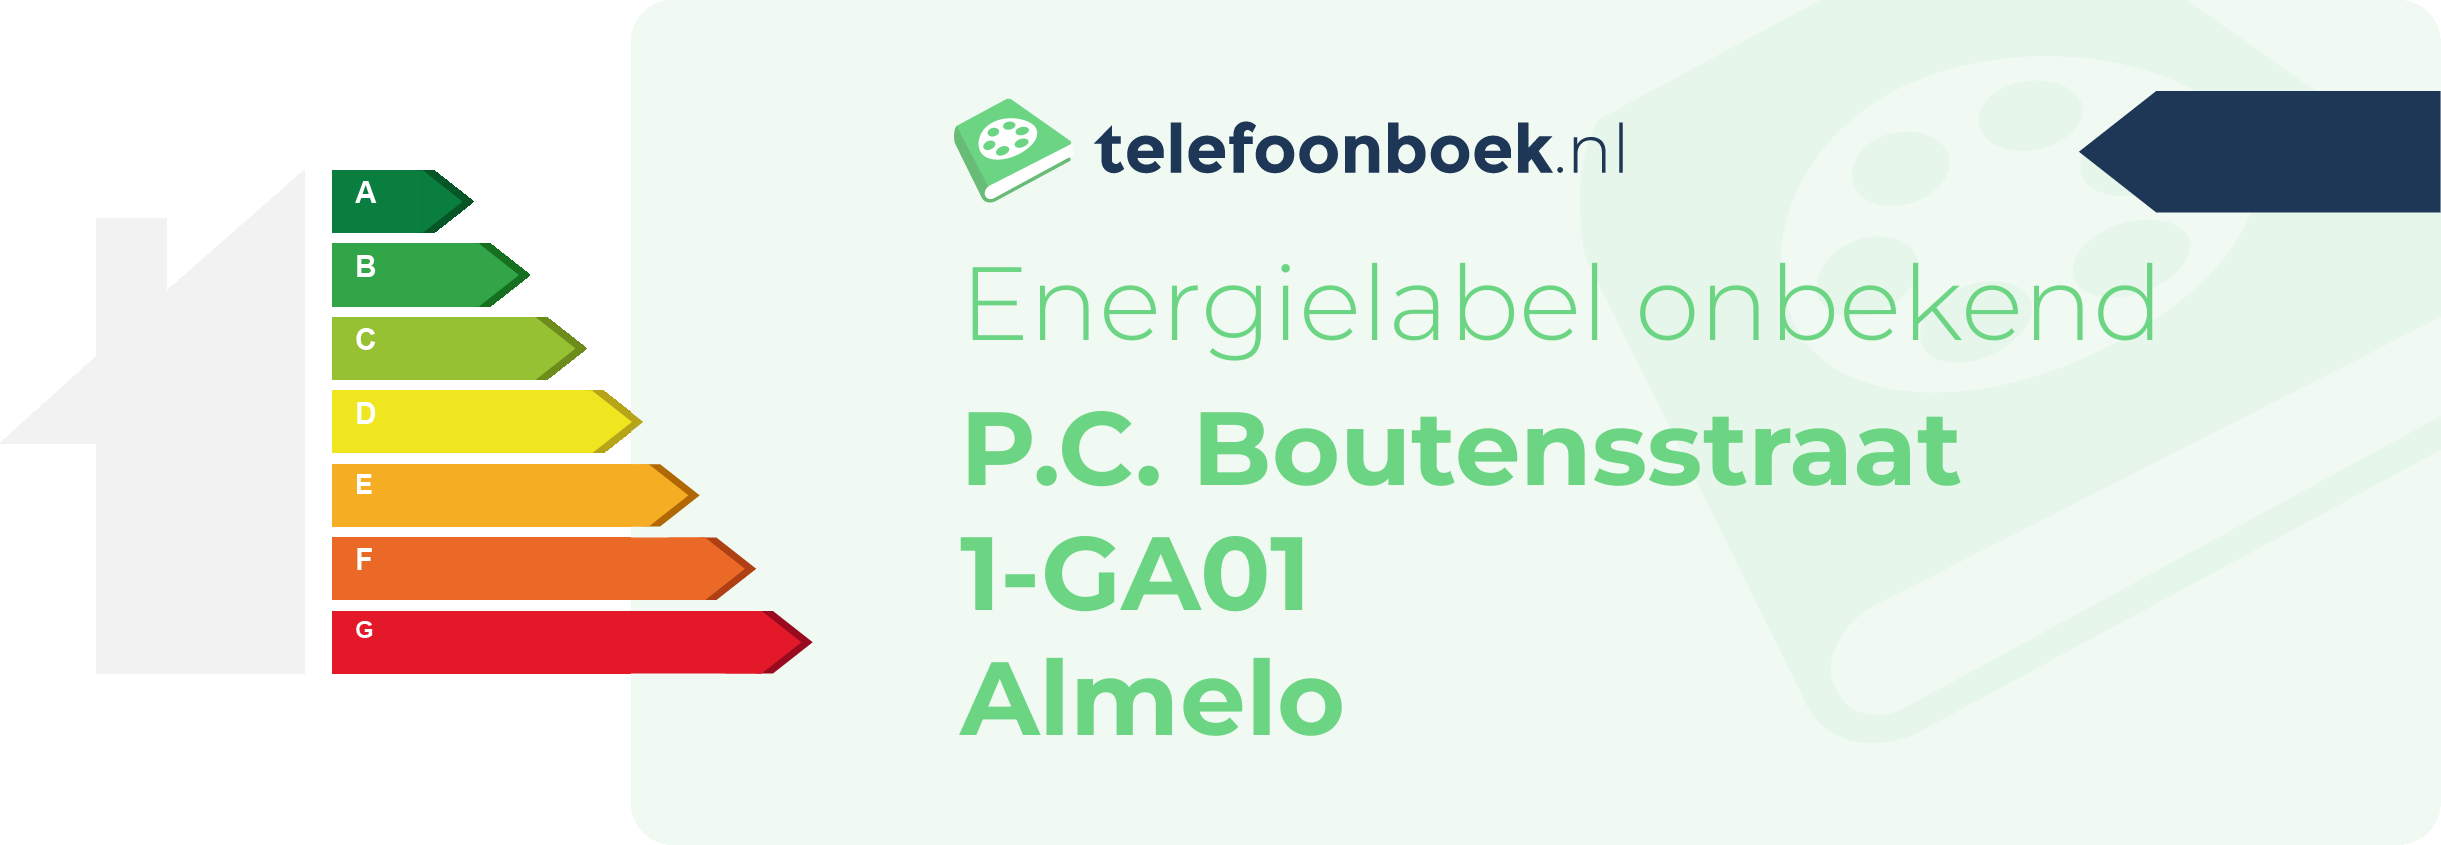 Energielabel P.C. Boutensstraat 1-GA01 Almelo